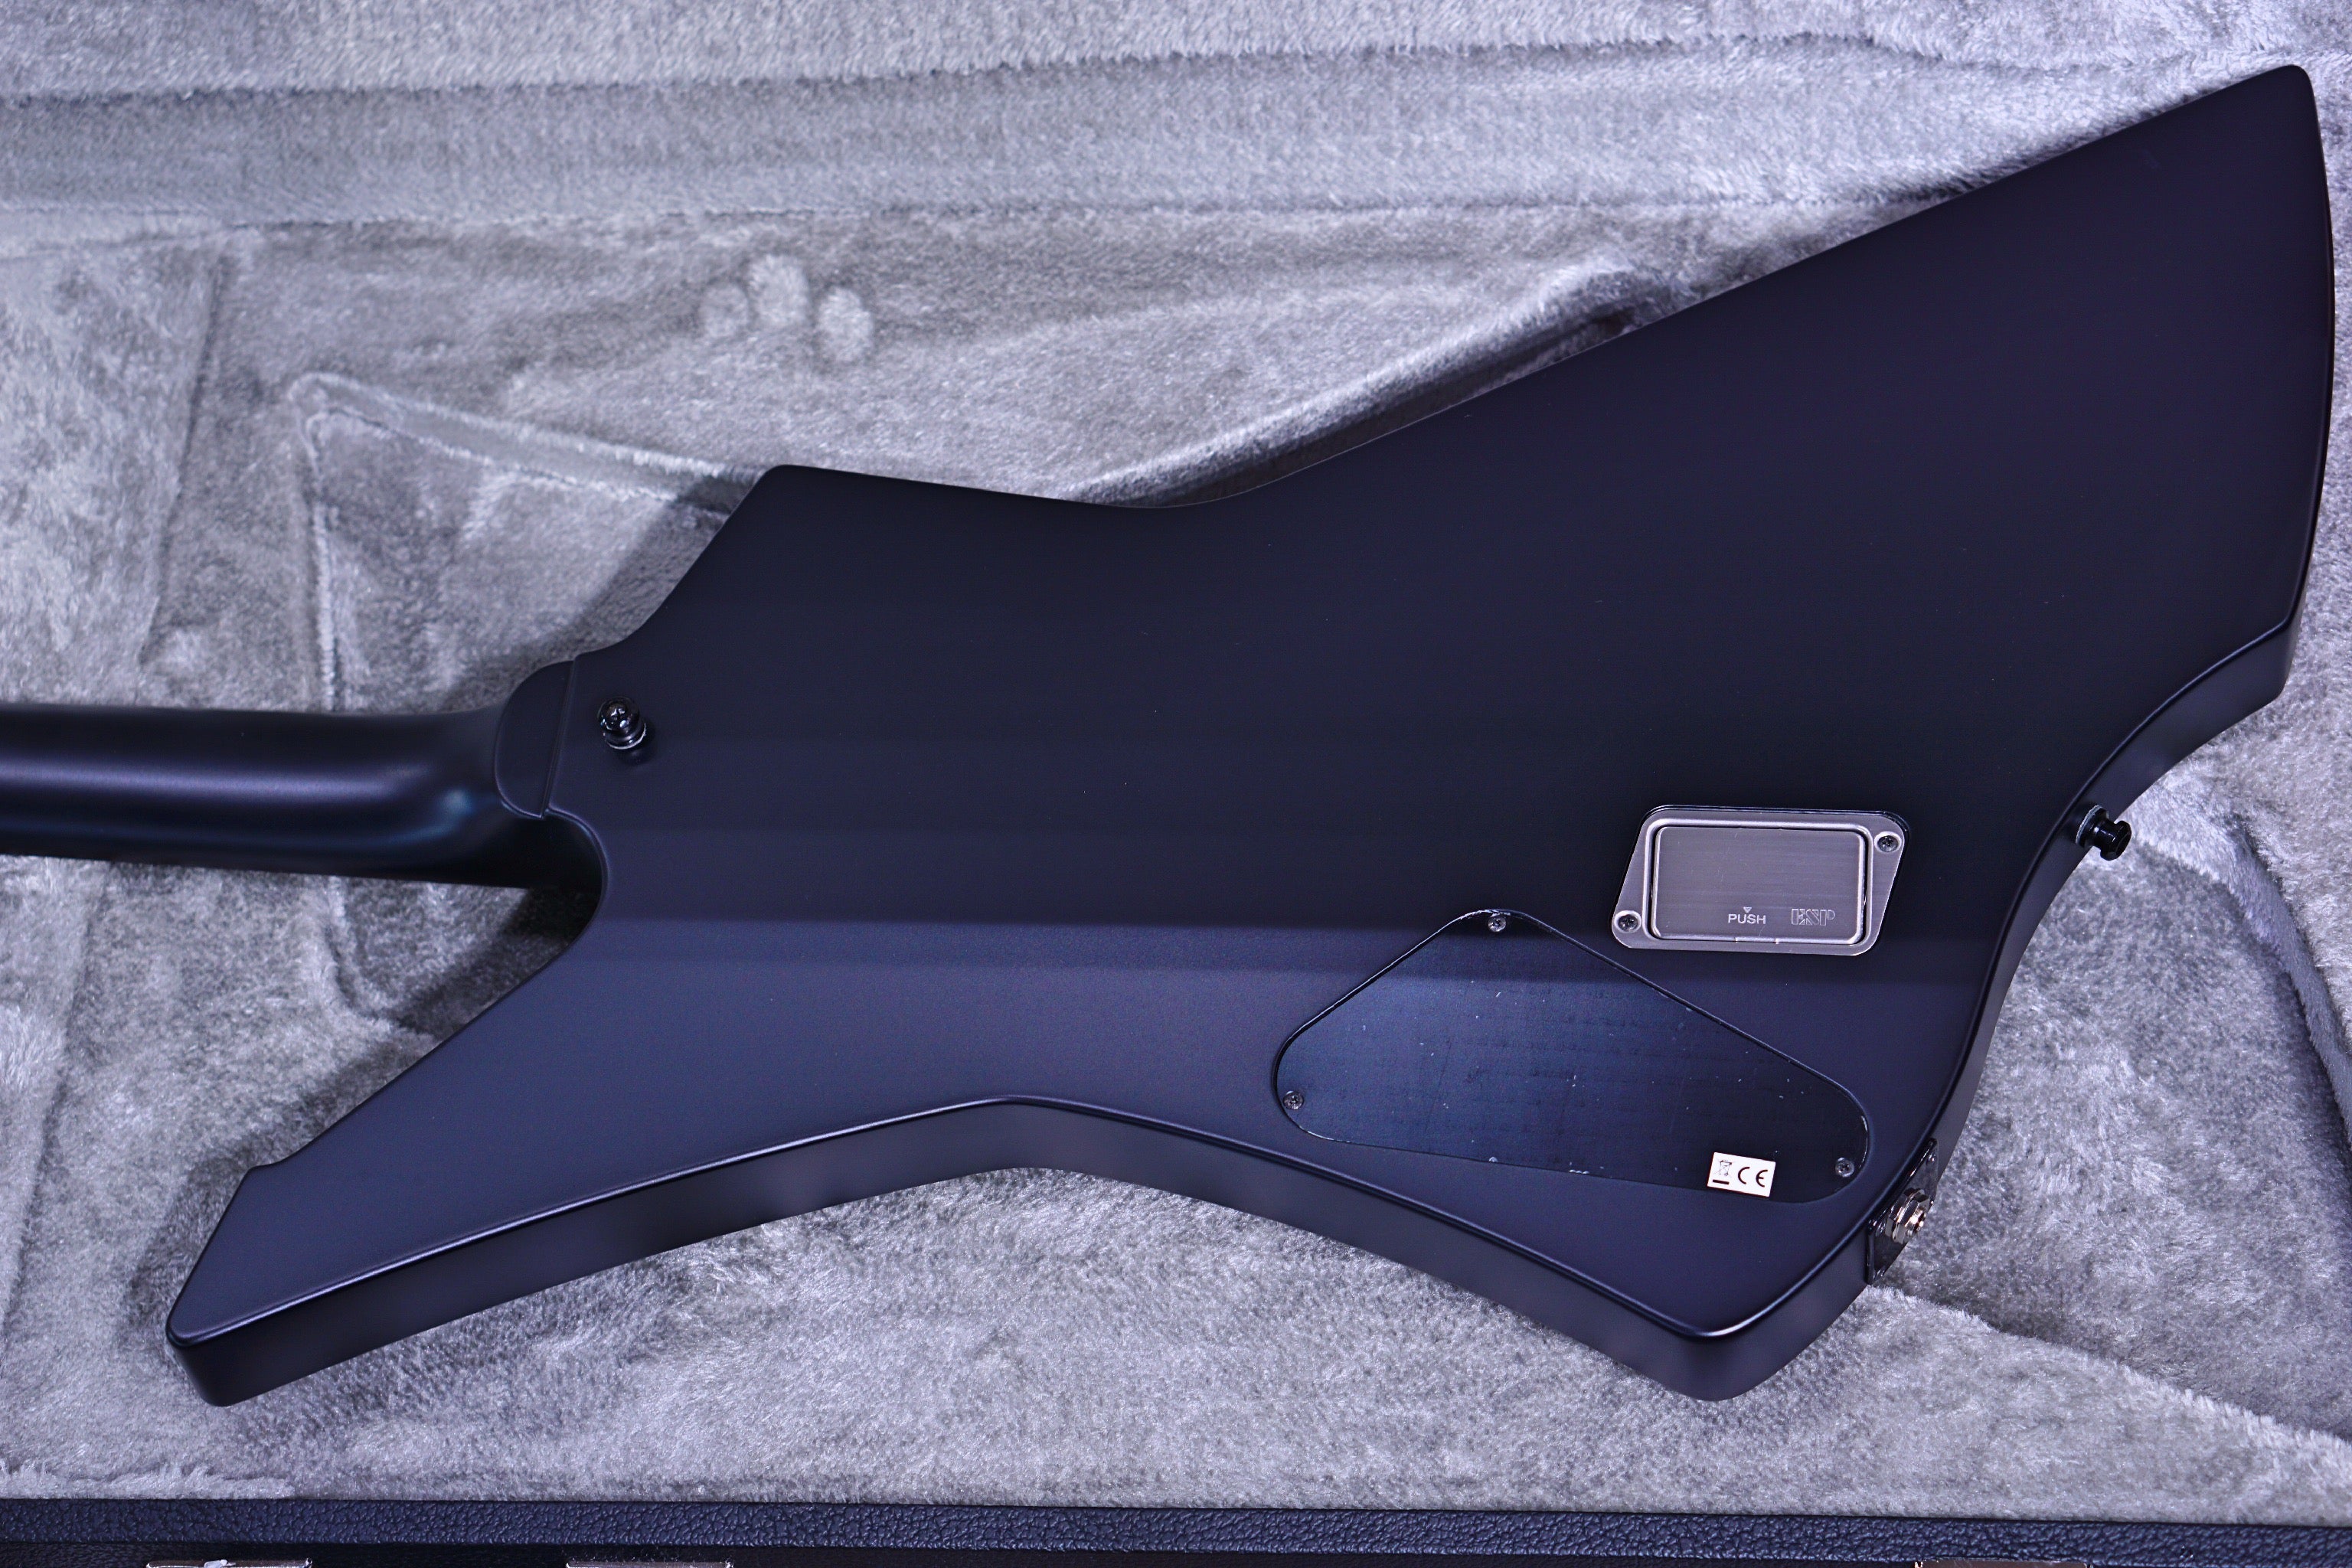 ESP Snakebyte James Hetfield signature satin Black E7690202 - HIENDGUITAR   ESP GUITAR